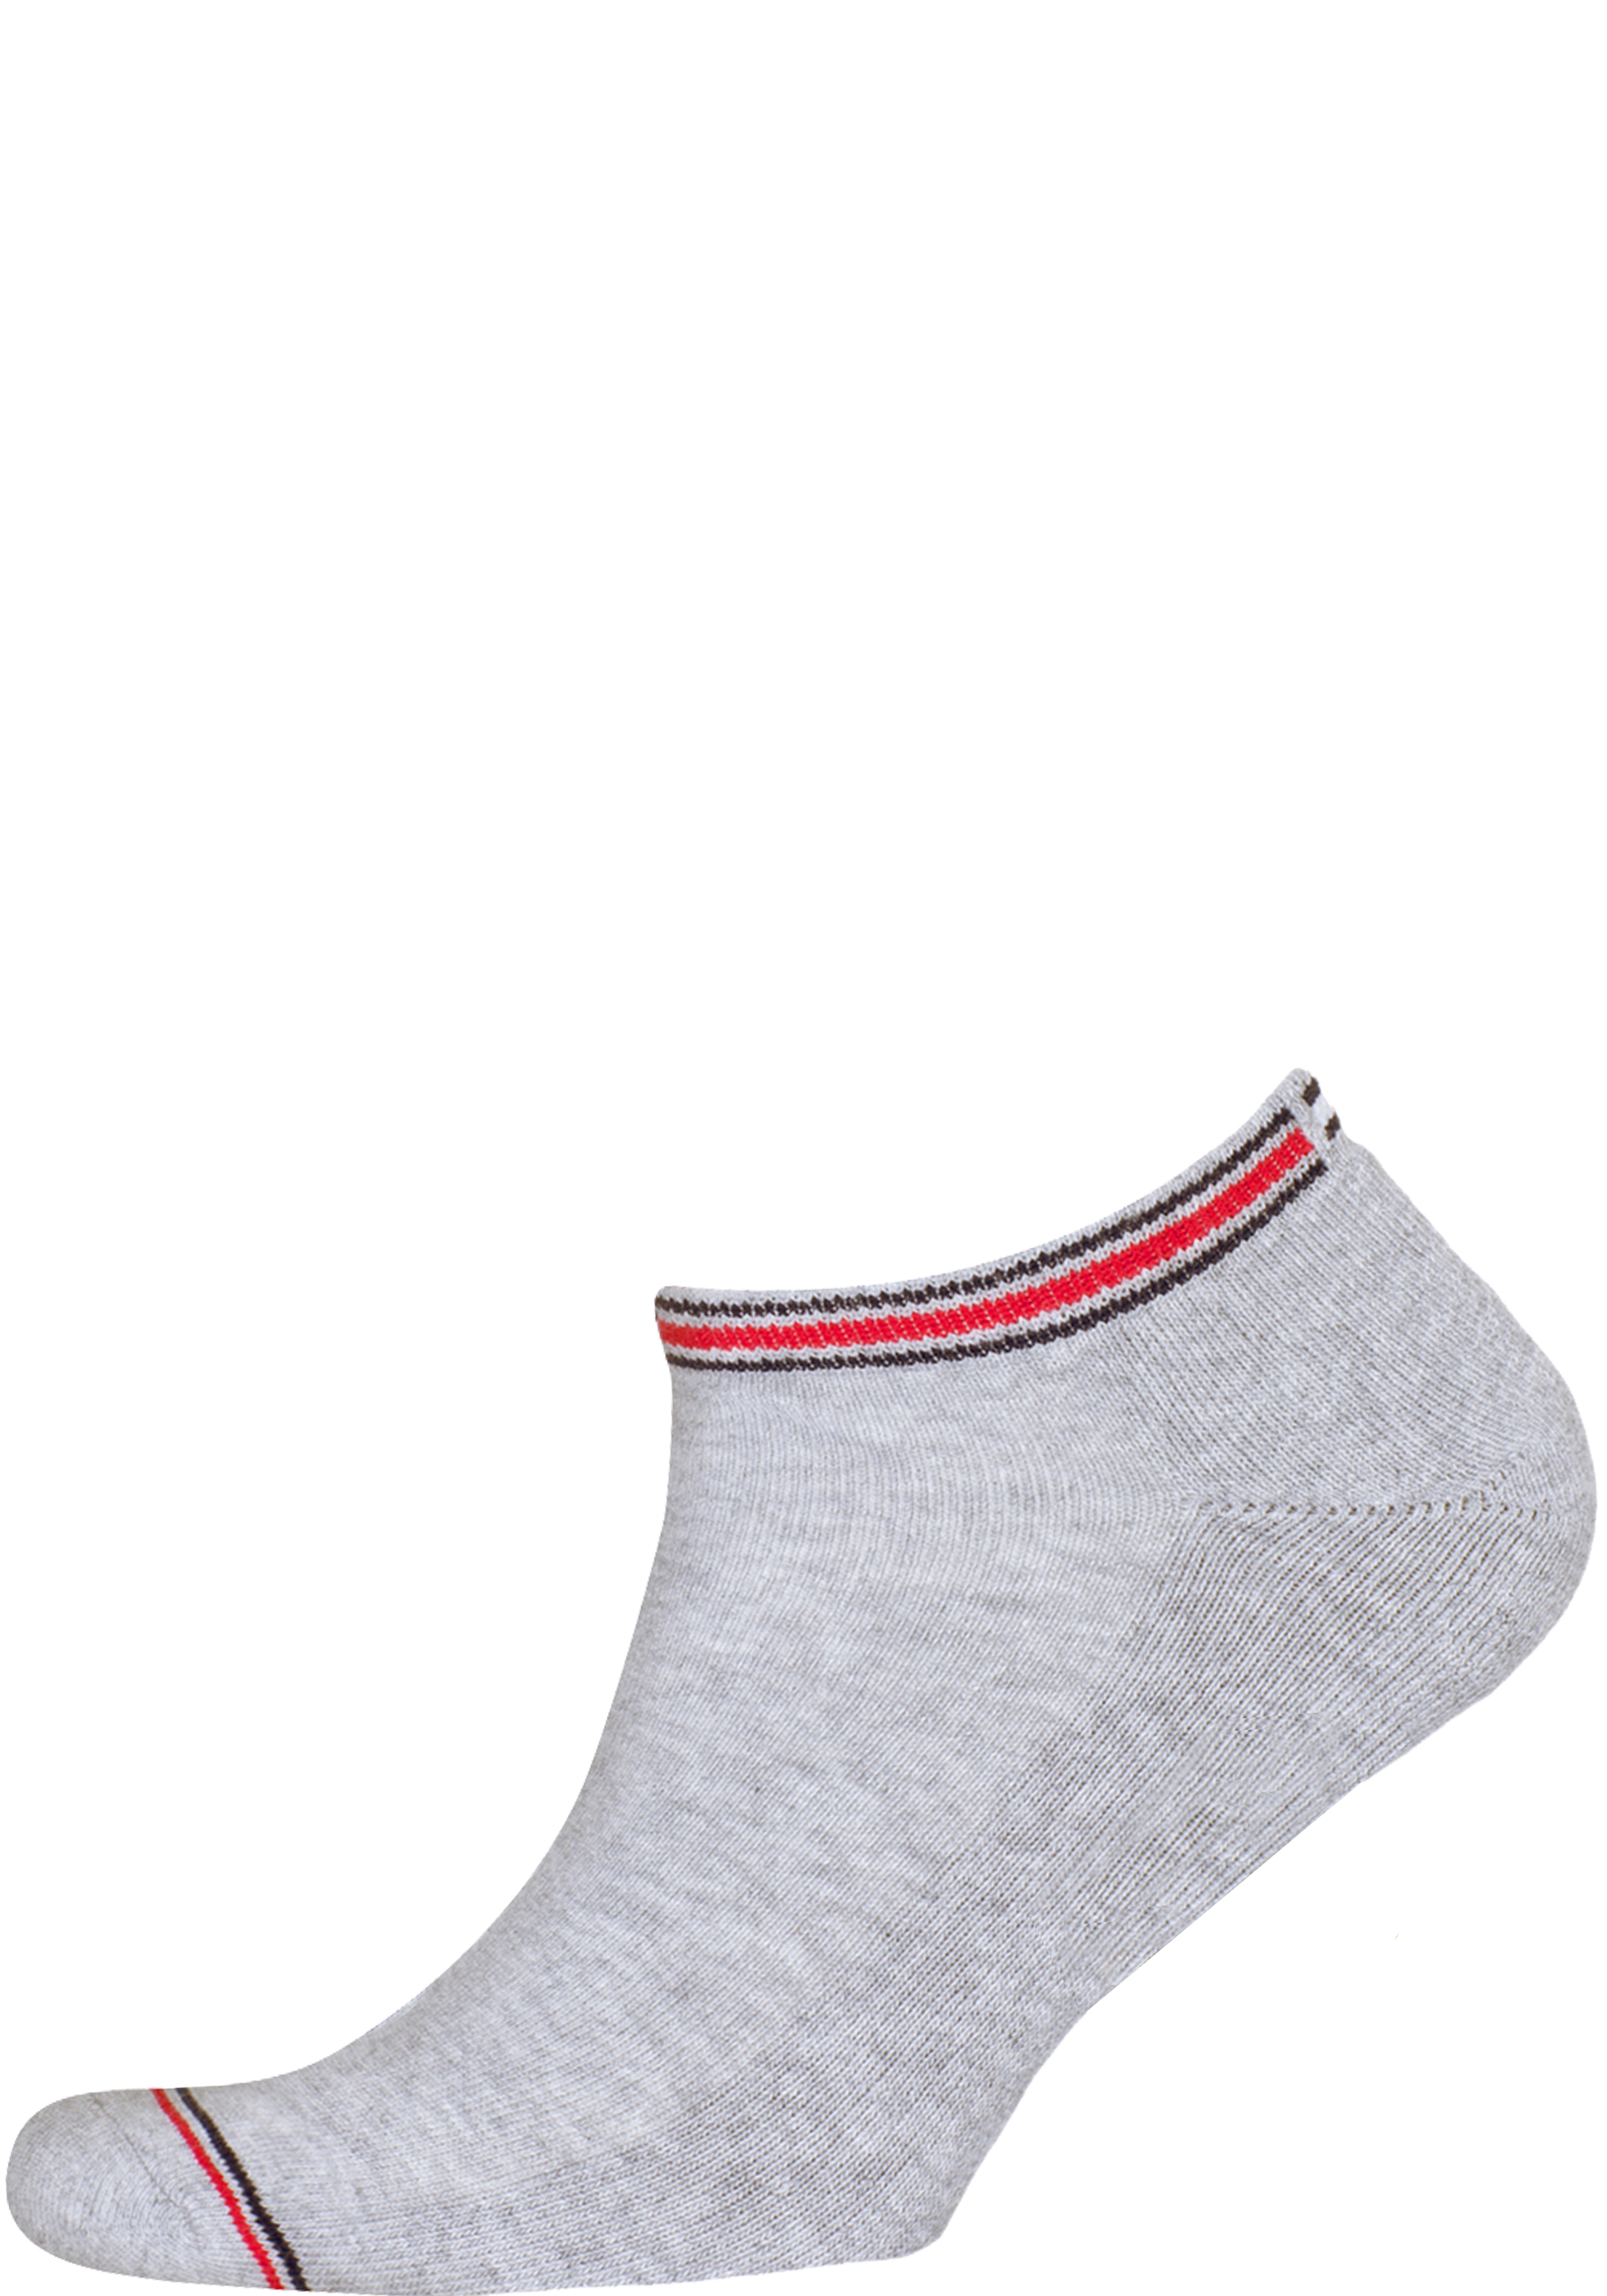 Tommy Hilfiger Iconic Sports Sneaker Socks (2-pack), heren sport enkelsokken, grijs